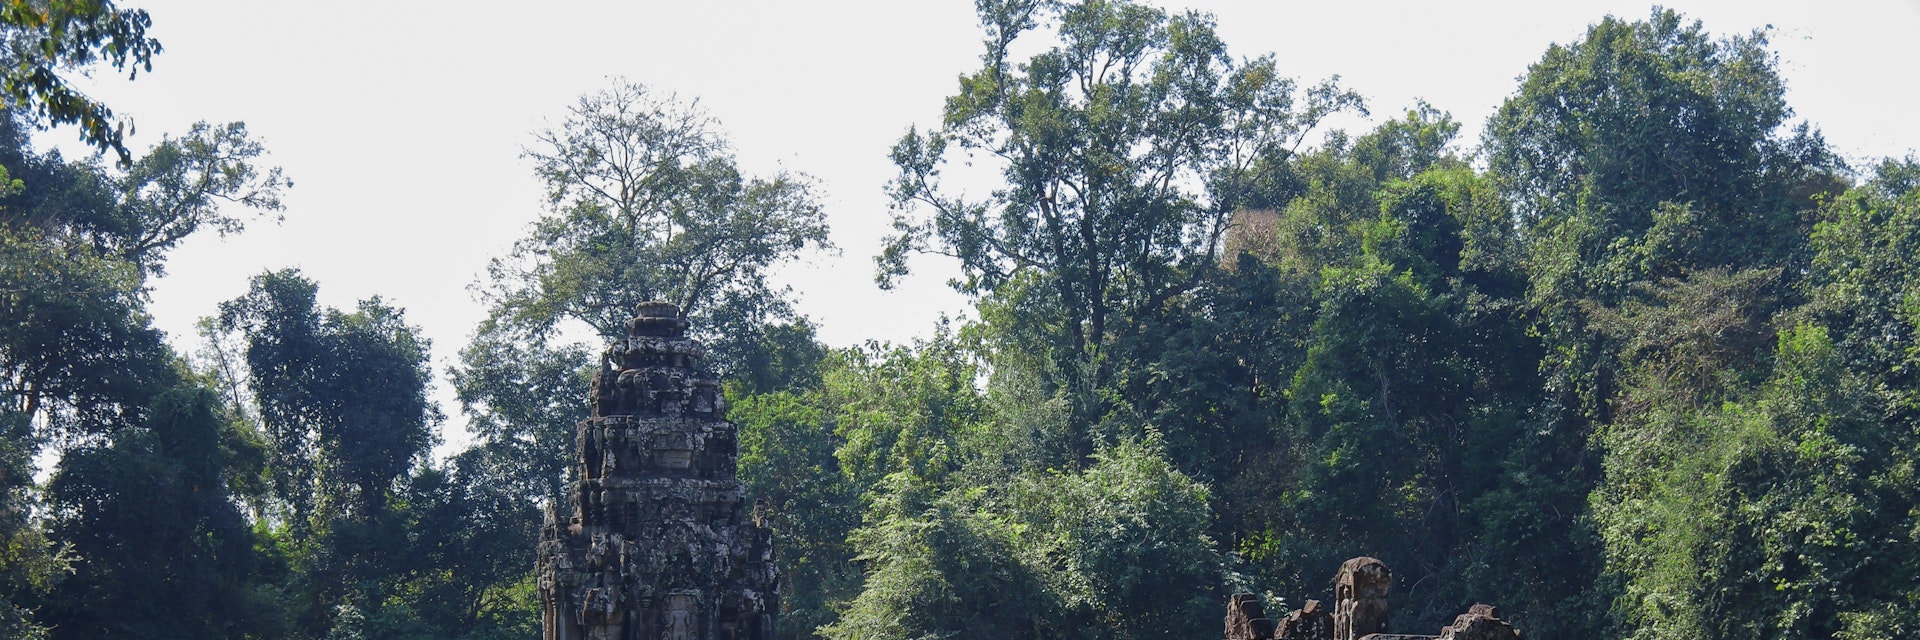 View of the island temple Preah Neak Poan at Angkor on Cambodia
1337694549
aec, antiquated, archaic, asean, asian, belief, culture, doctrine, editorial, faith, hindu, historic, jungle, lagune, landmark, mysterious, naka, primitive, reap, ruin, serpent, siem, stone, tank, temple, wood